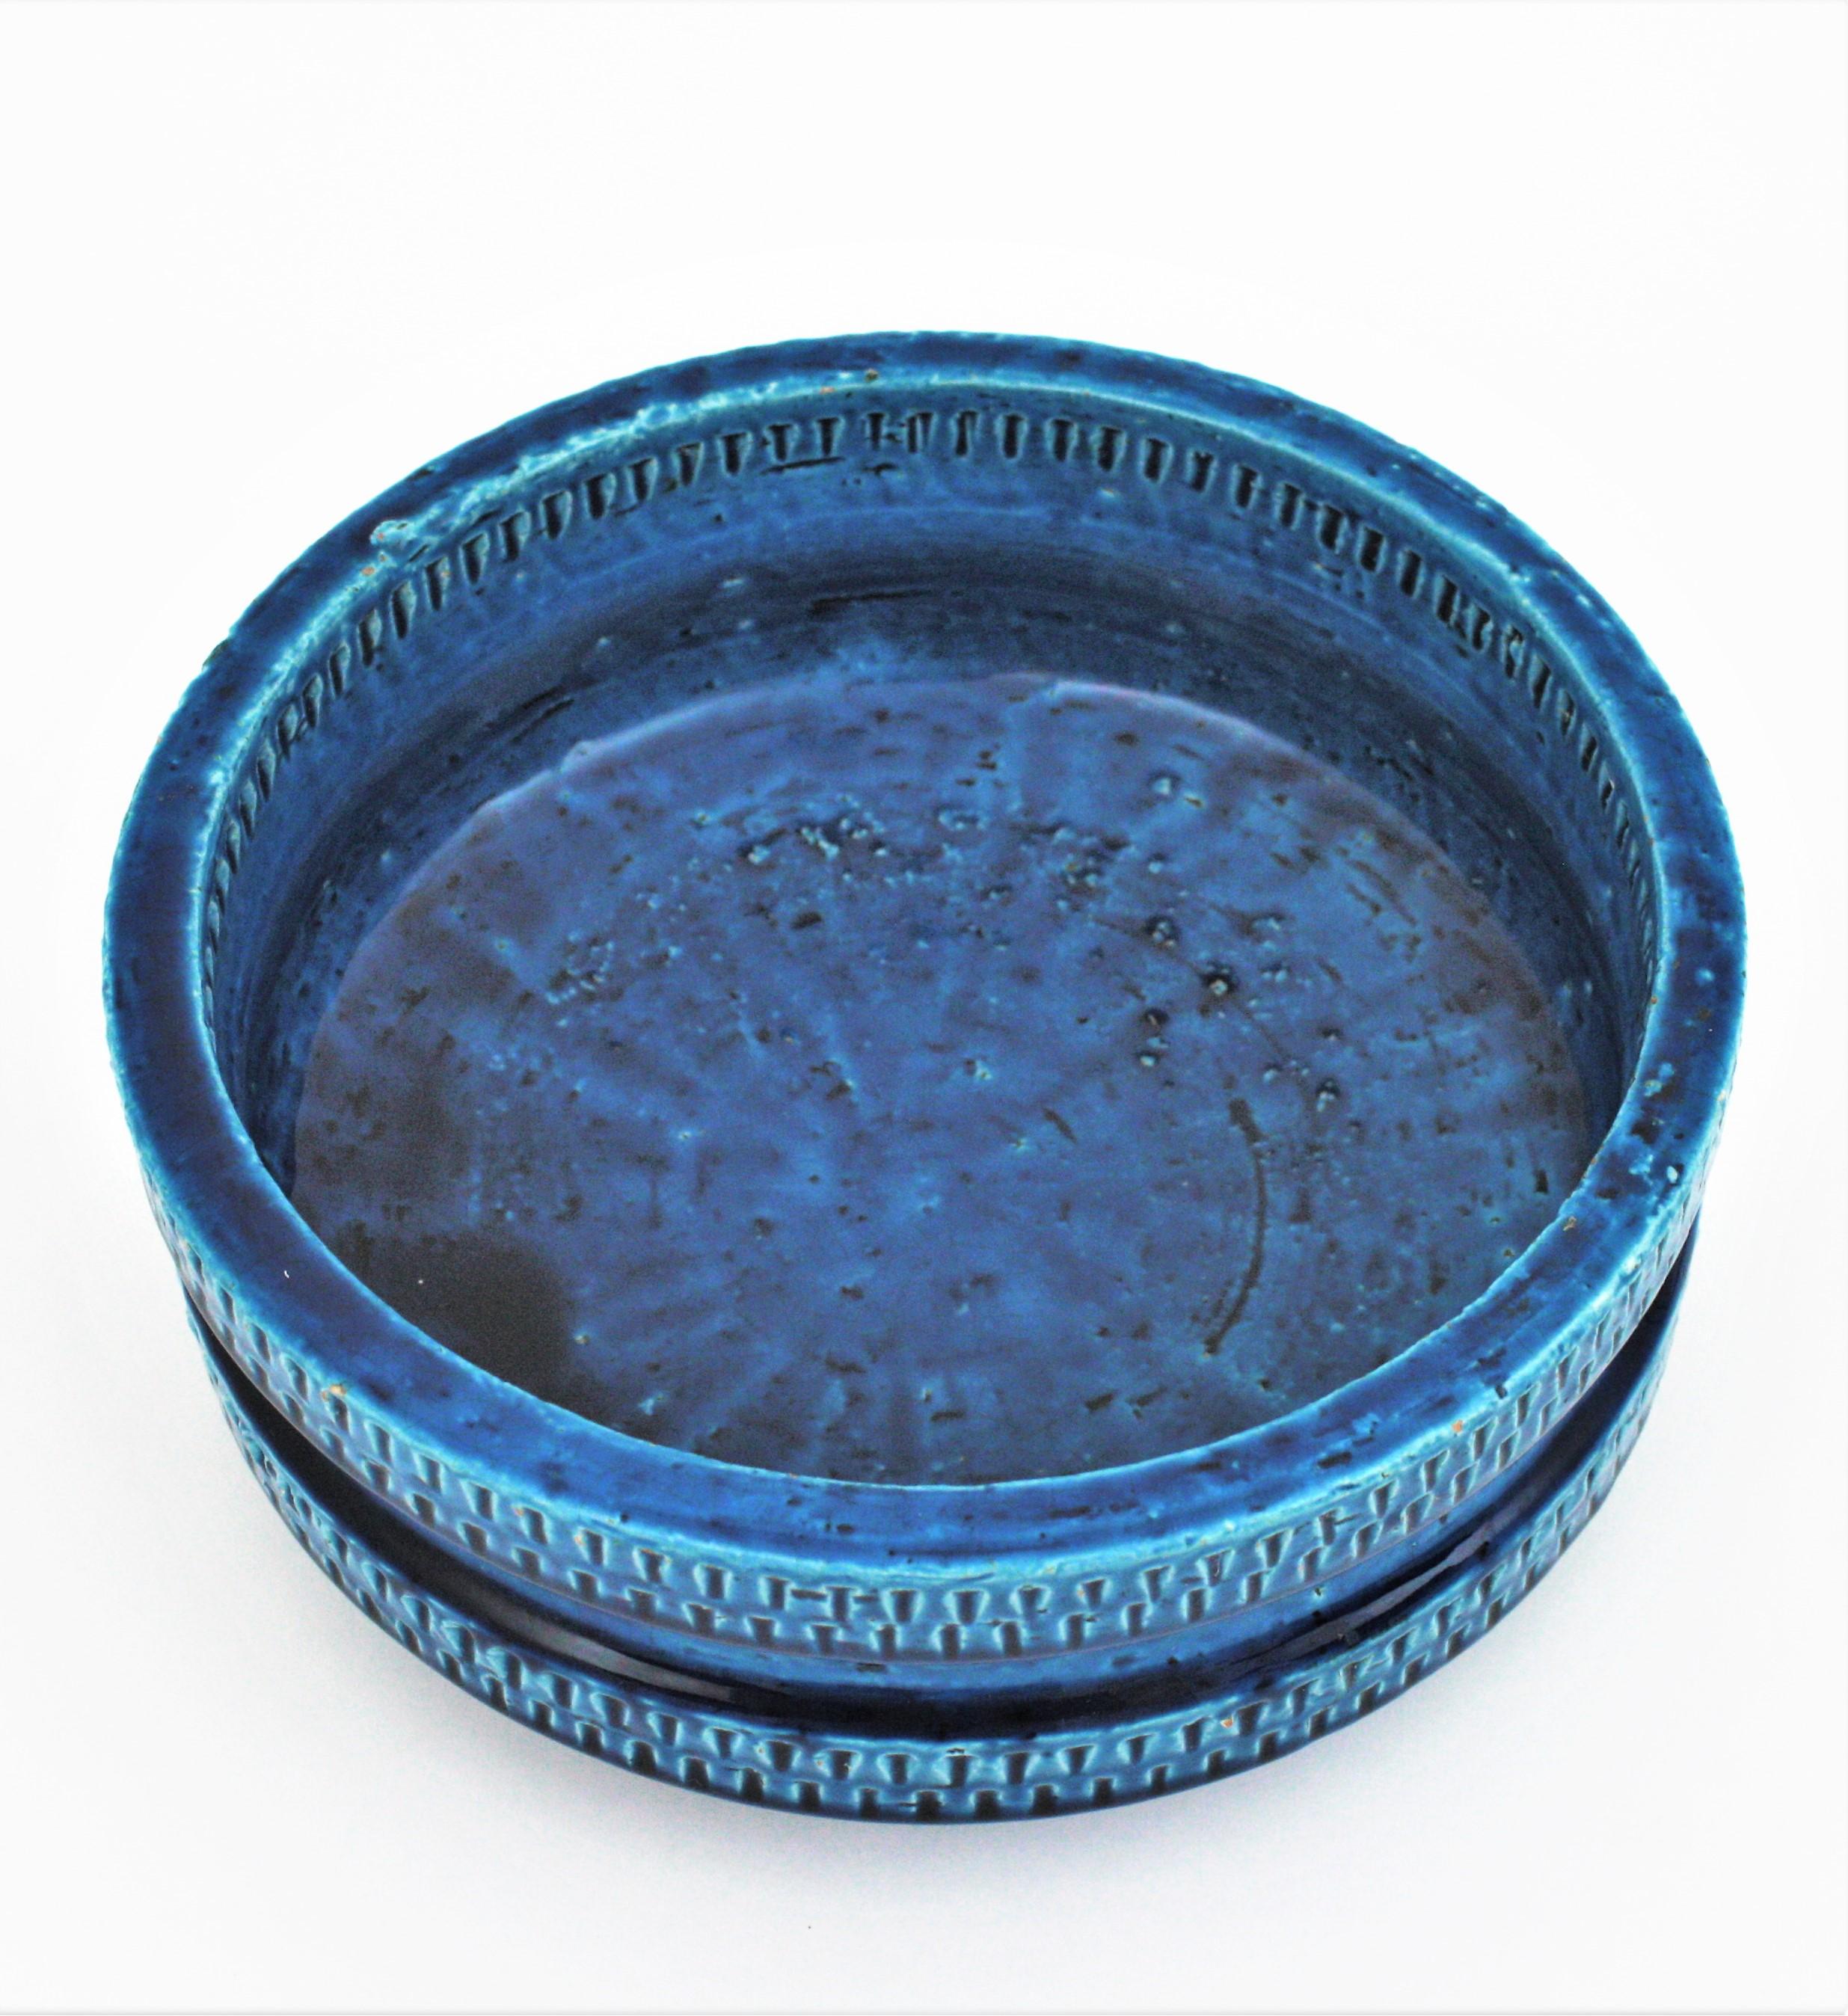 SIC Rimini Blue Glazed Ceramic Large Centerpiece Bowl, Bitossi Aldo Londi Style 1